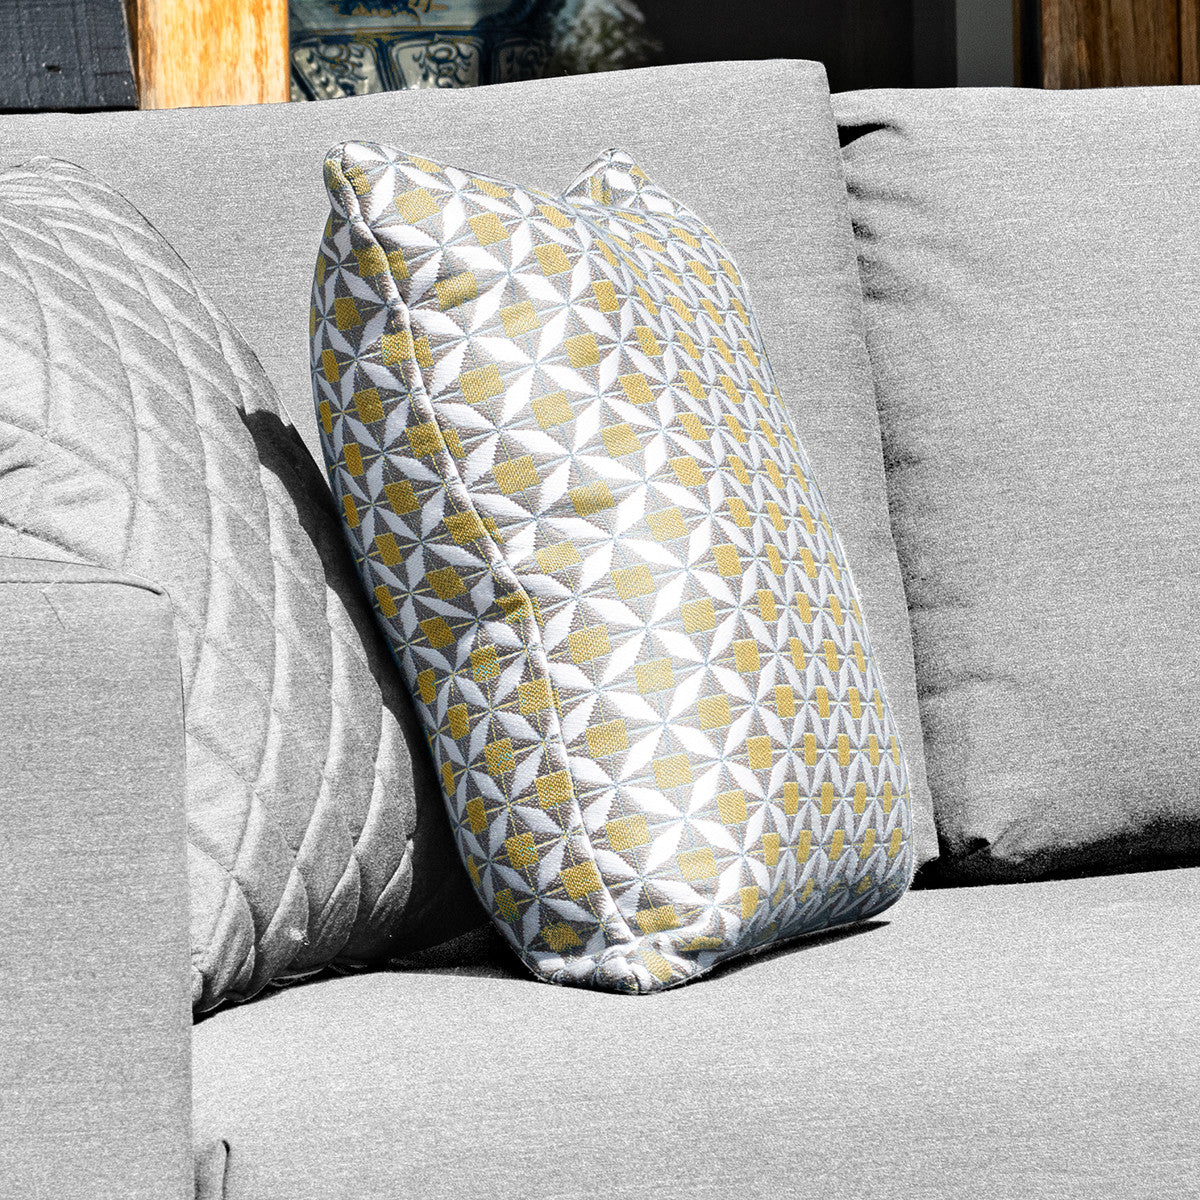 Pair of Yellow Mosaic Outdoor Cushions